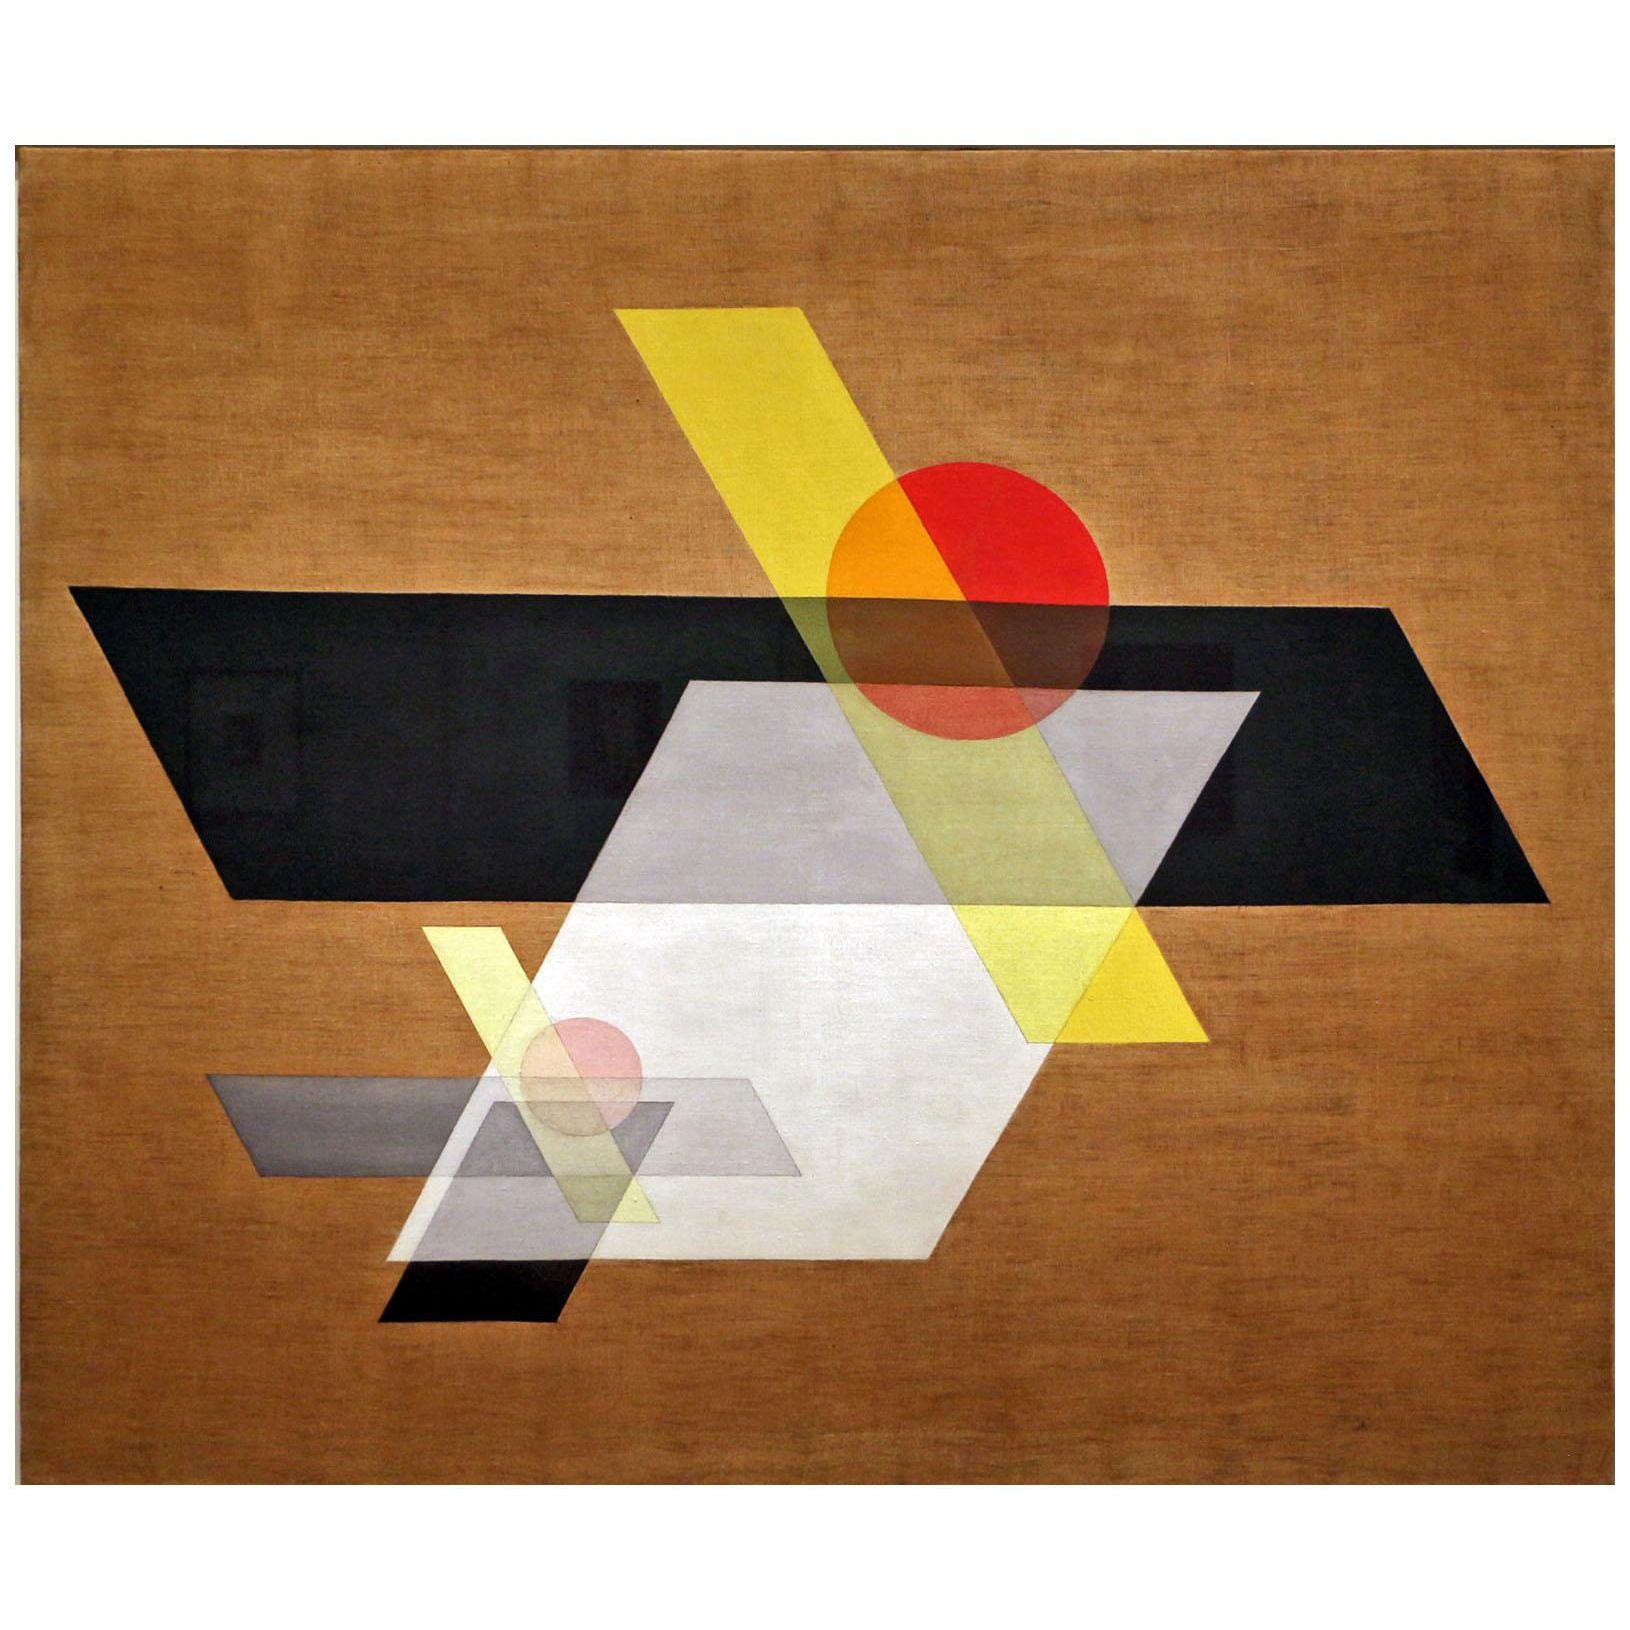 Laszlo Moholy-Nagy. A II. 1924. Guggenheim Museum NY